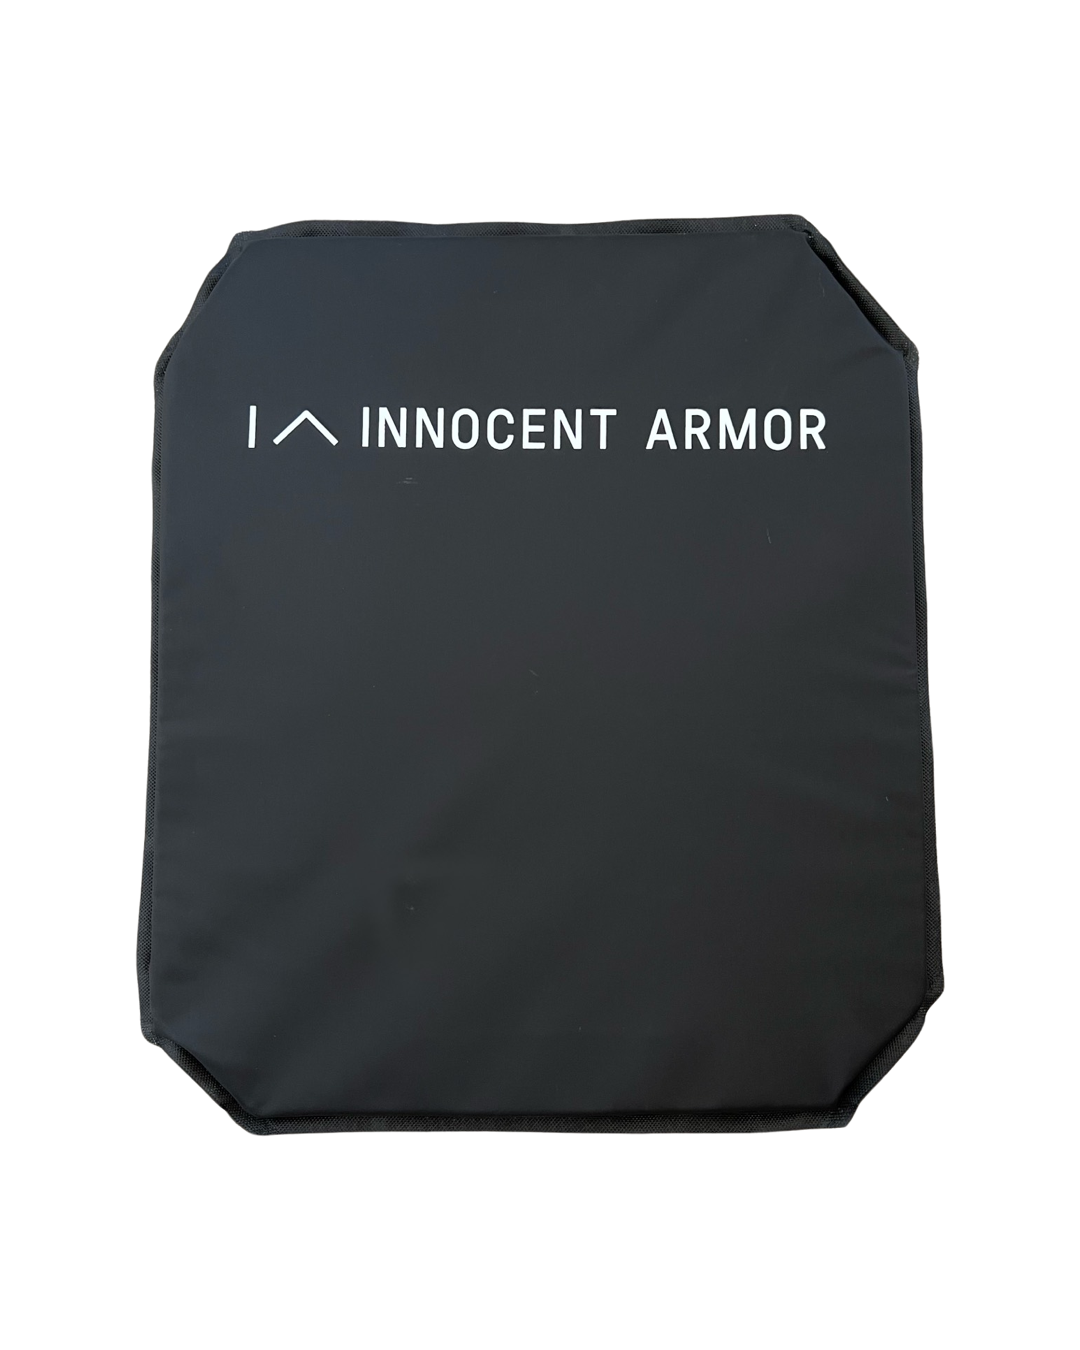 Innocent Armor Bulletproof Backpack Panel